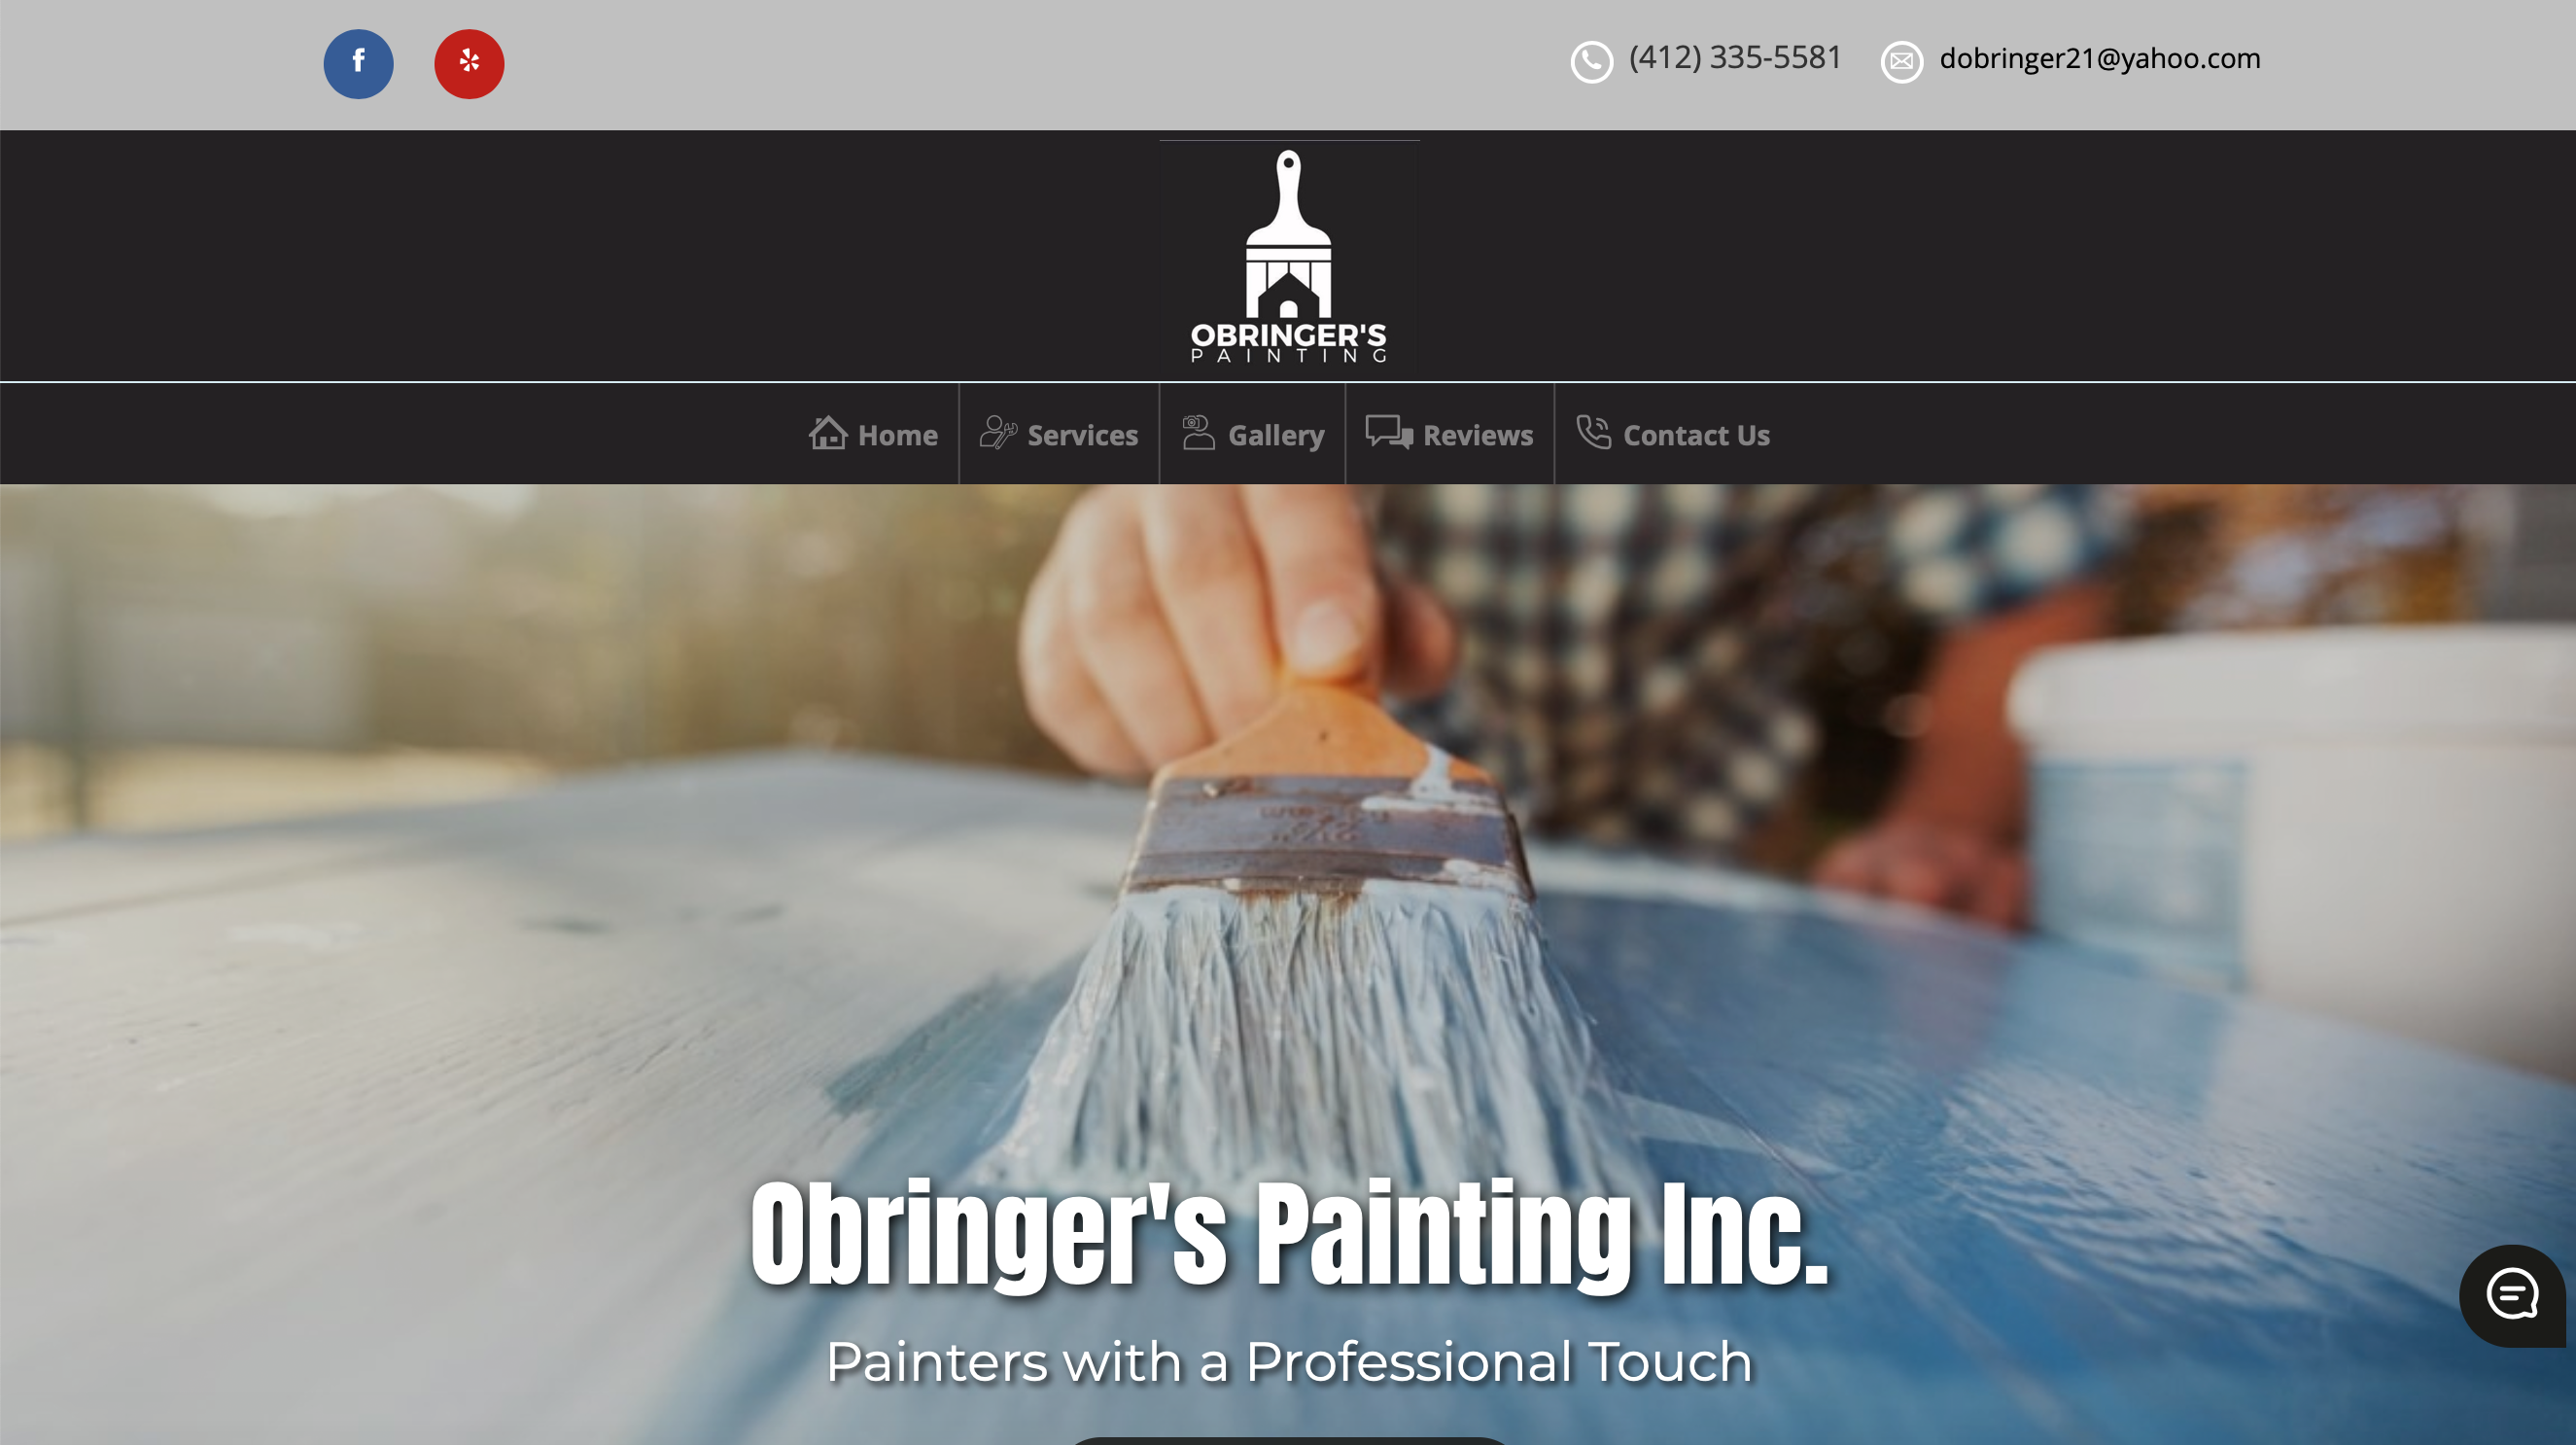 Obringers Painting Inc.